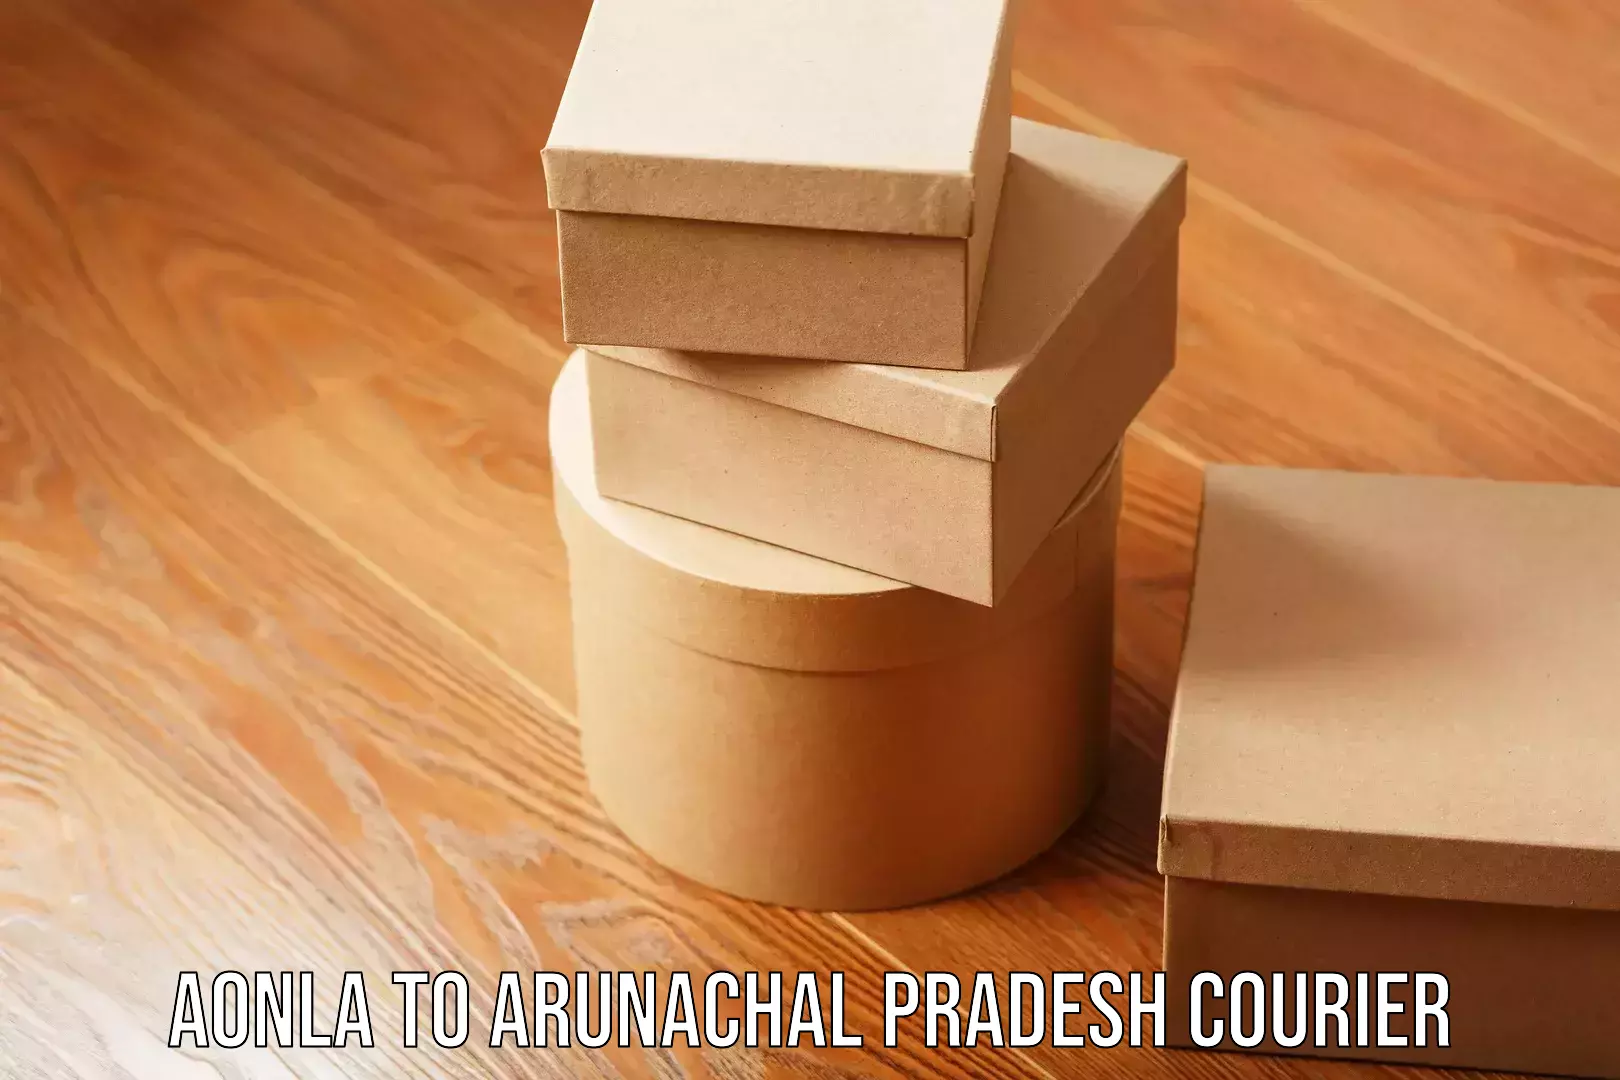 Express courier facilities Aonla to Arunachal Pradesh